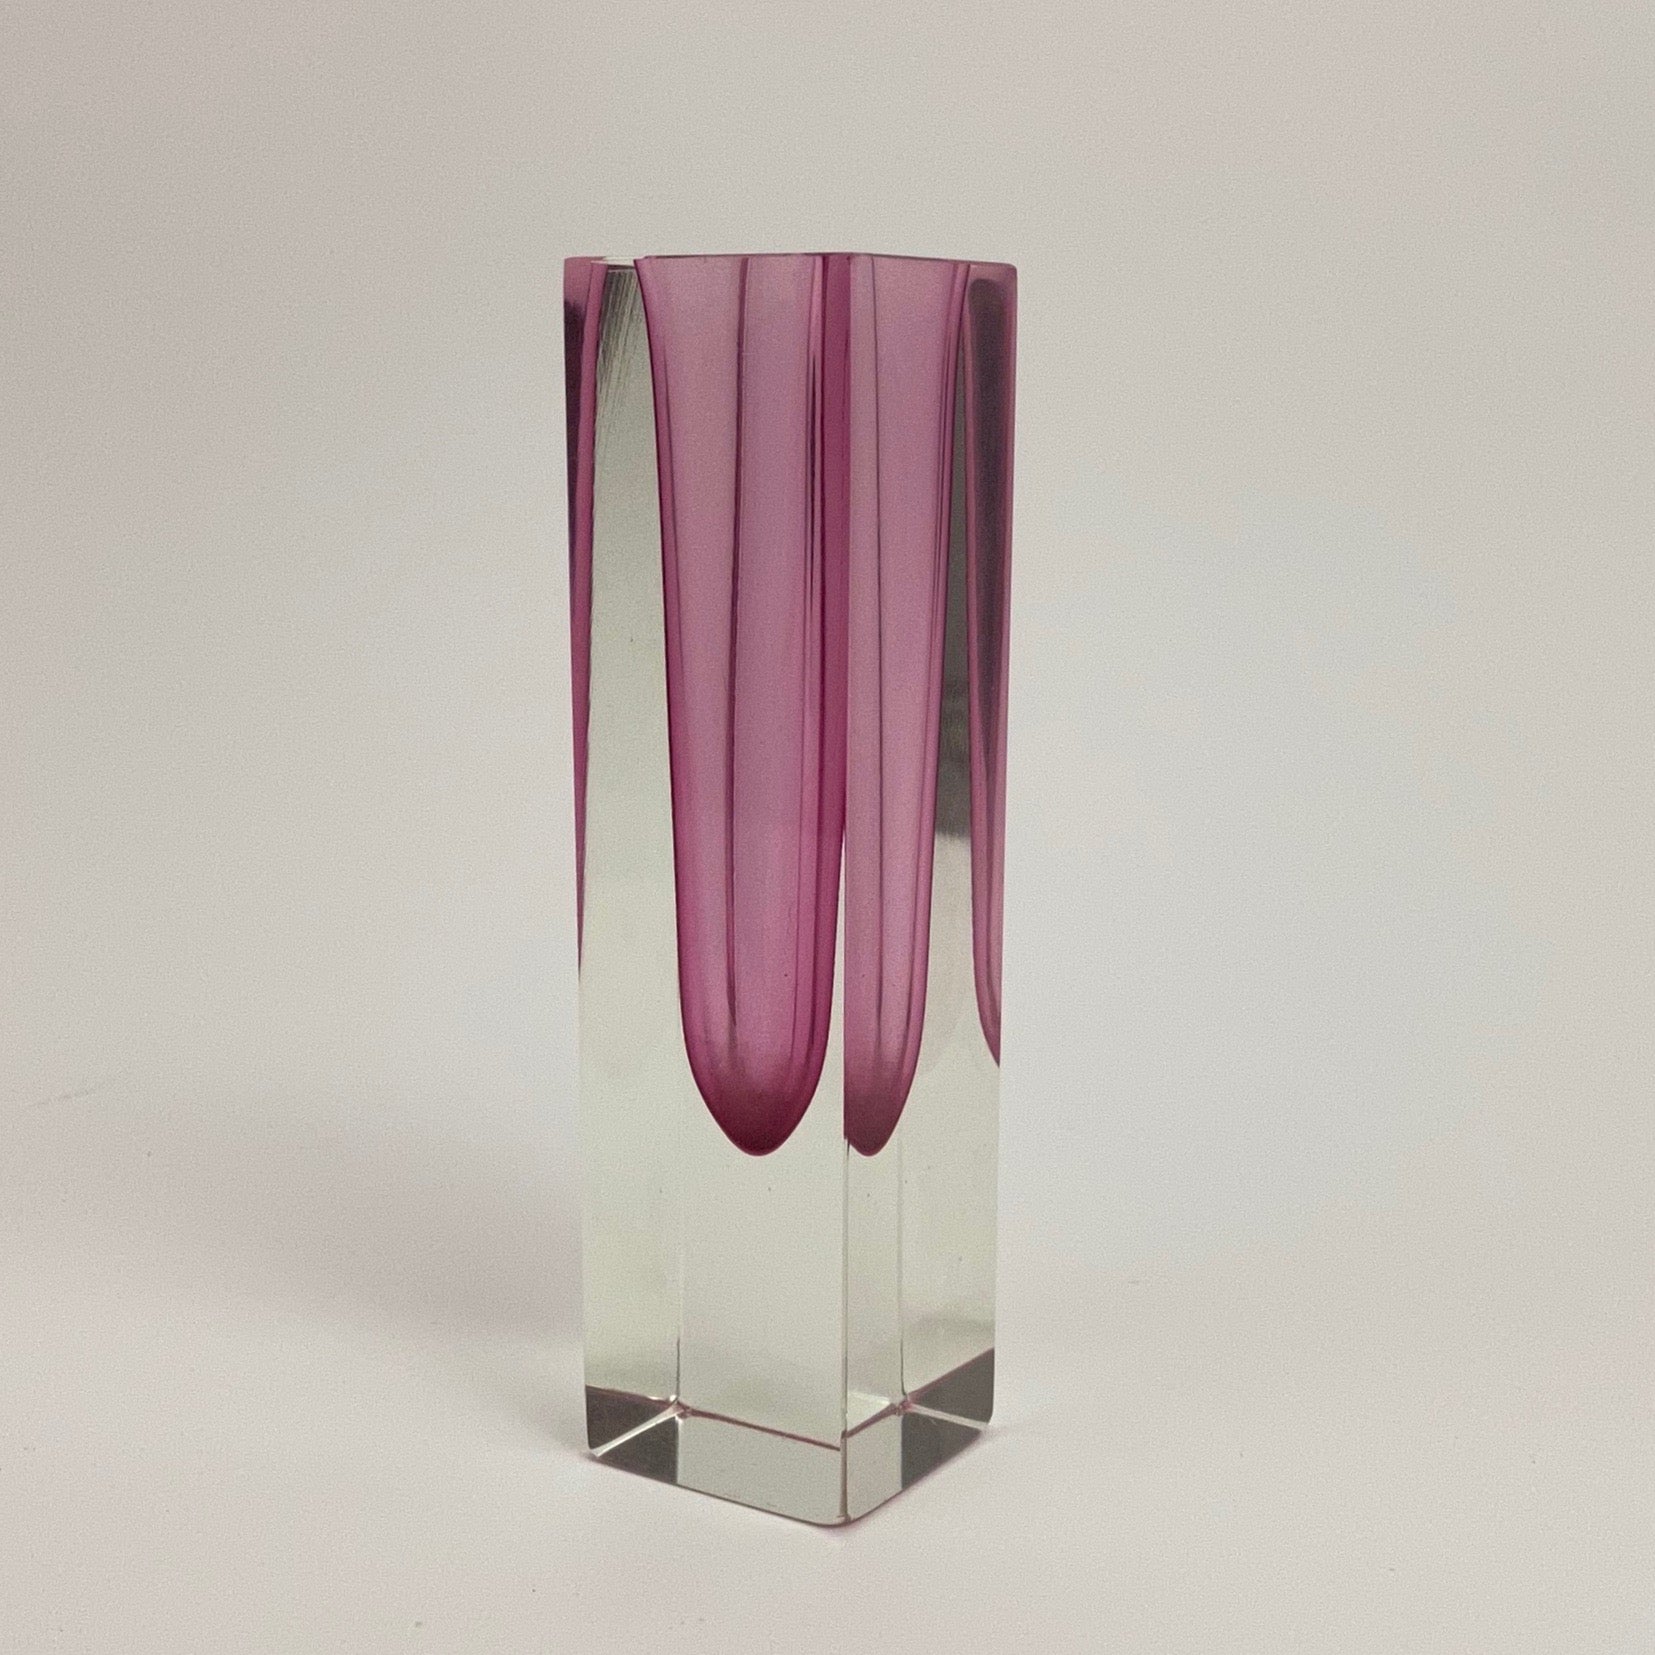 Medium Murano Seguso  vase with unusual pink cased body.